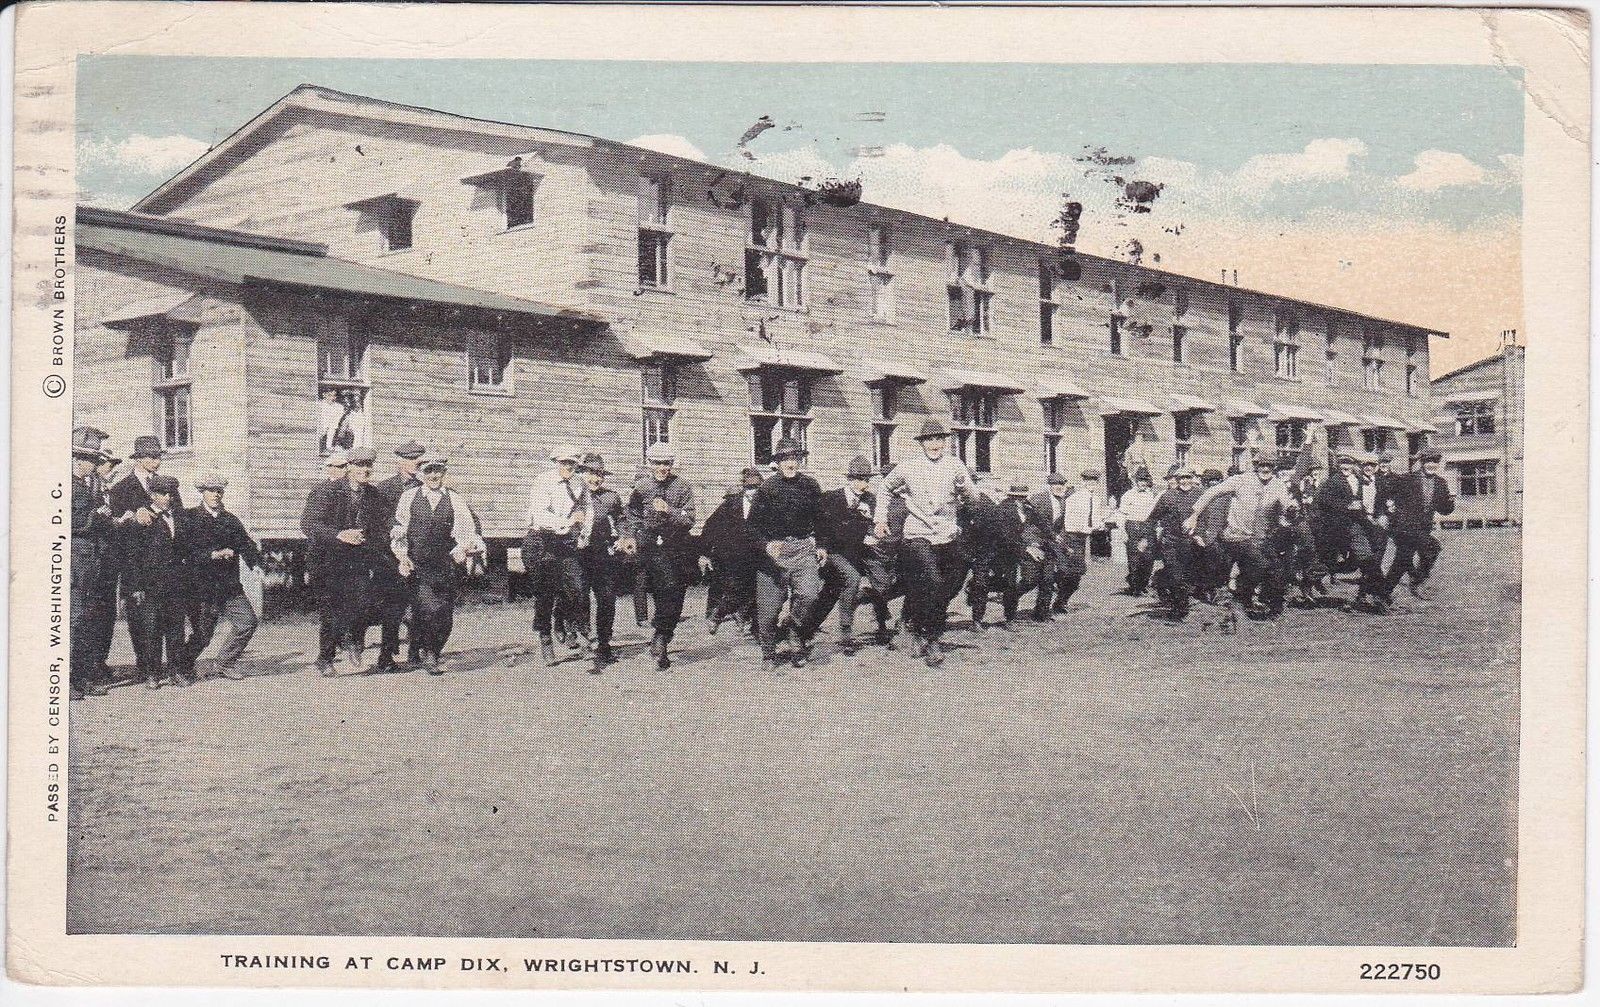 Camp Dix - Very basic training at Camp Dix - 1917-19